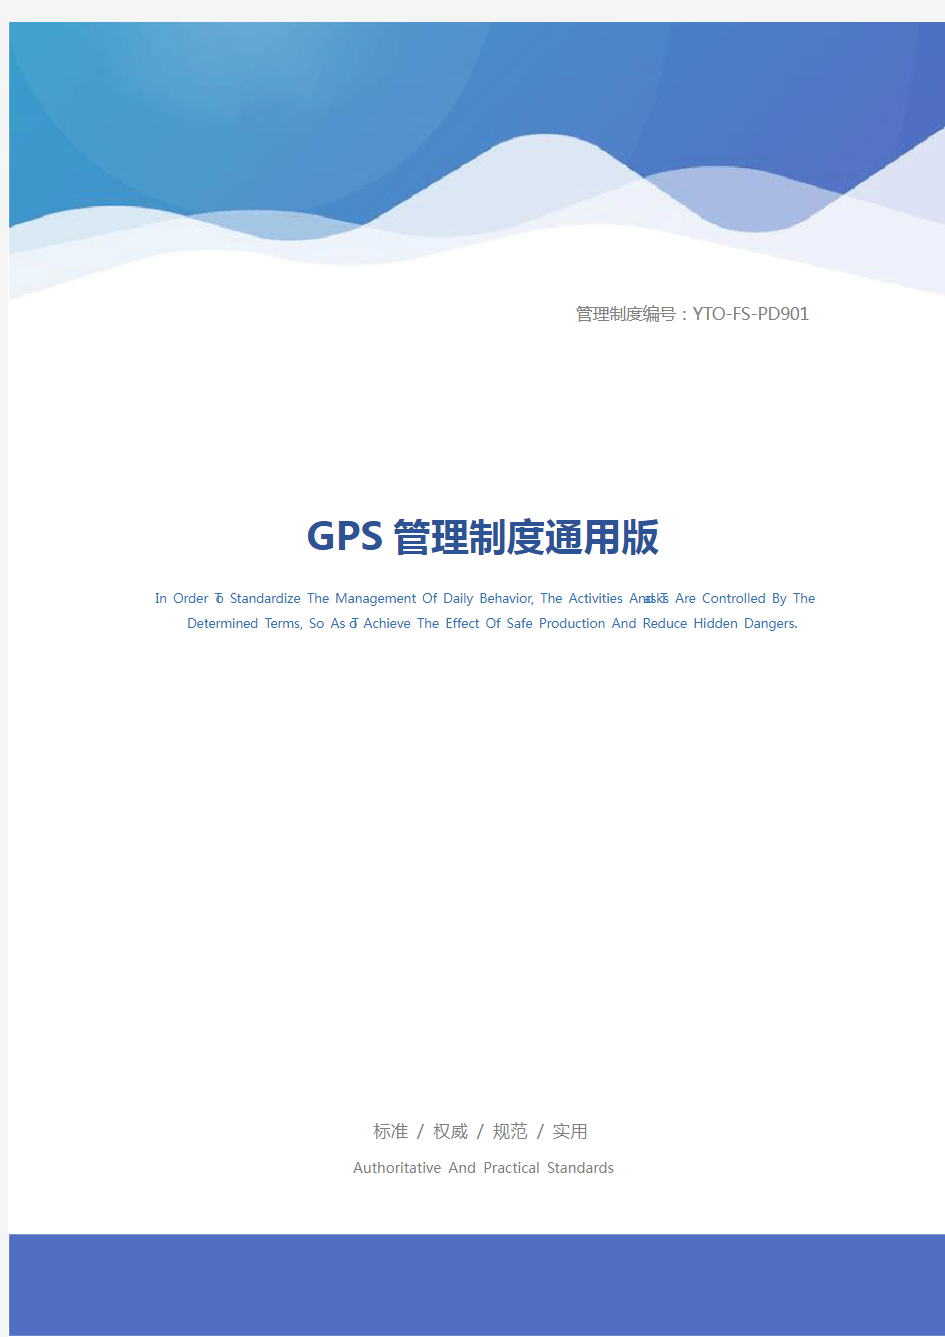 GPS管理制度通用版